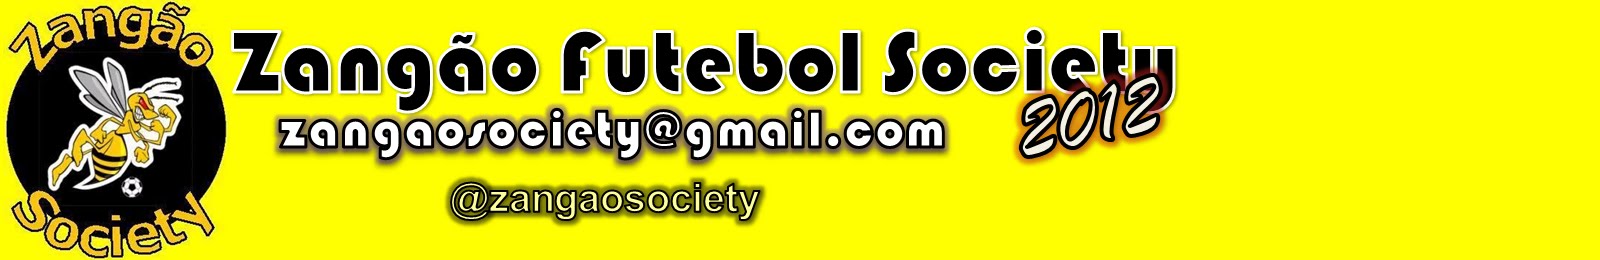 Zangão Futebol Society - @zangaosociety - zangaosociety@gmail.com